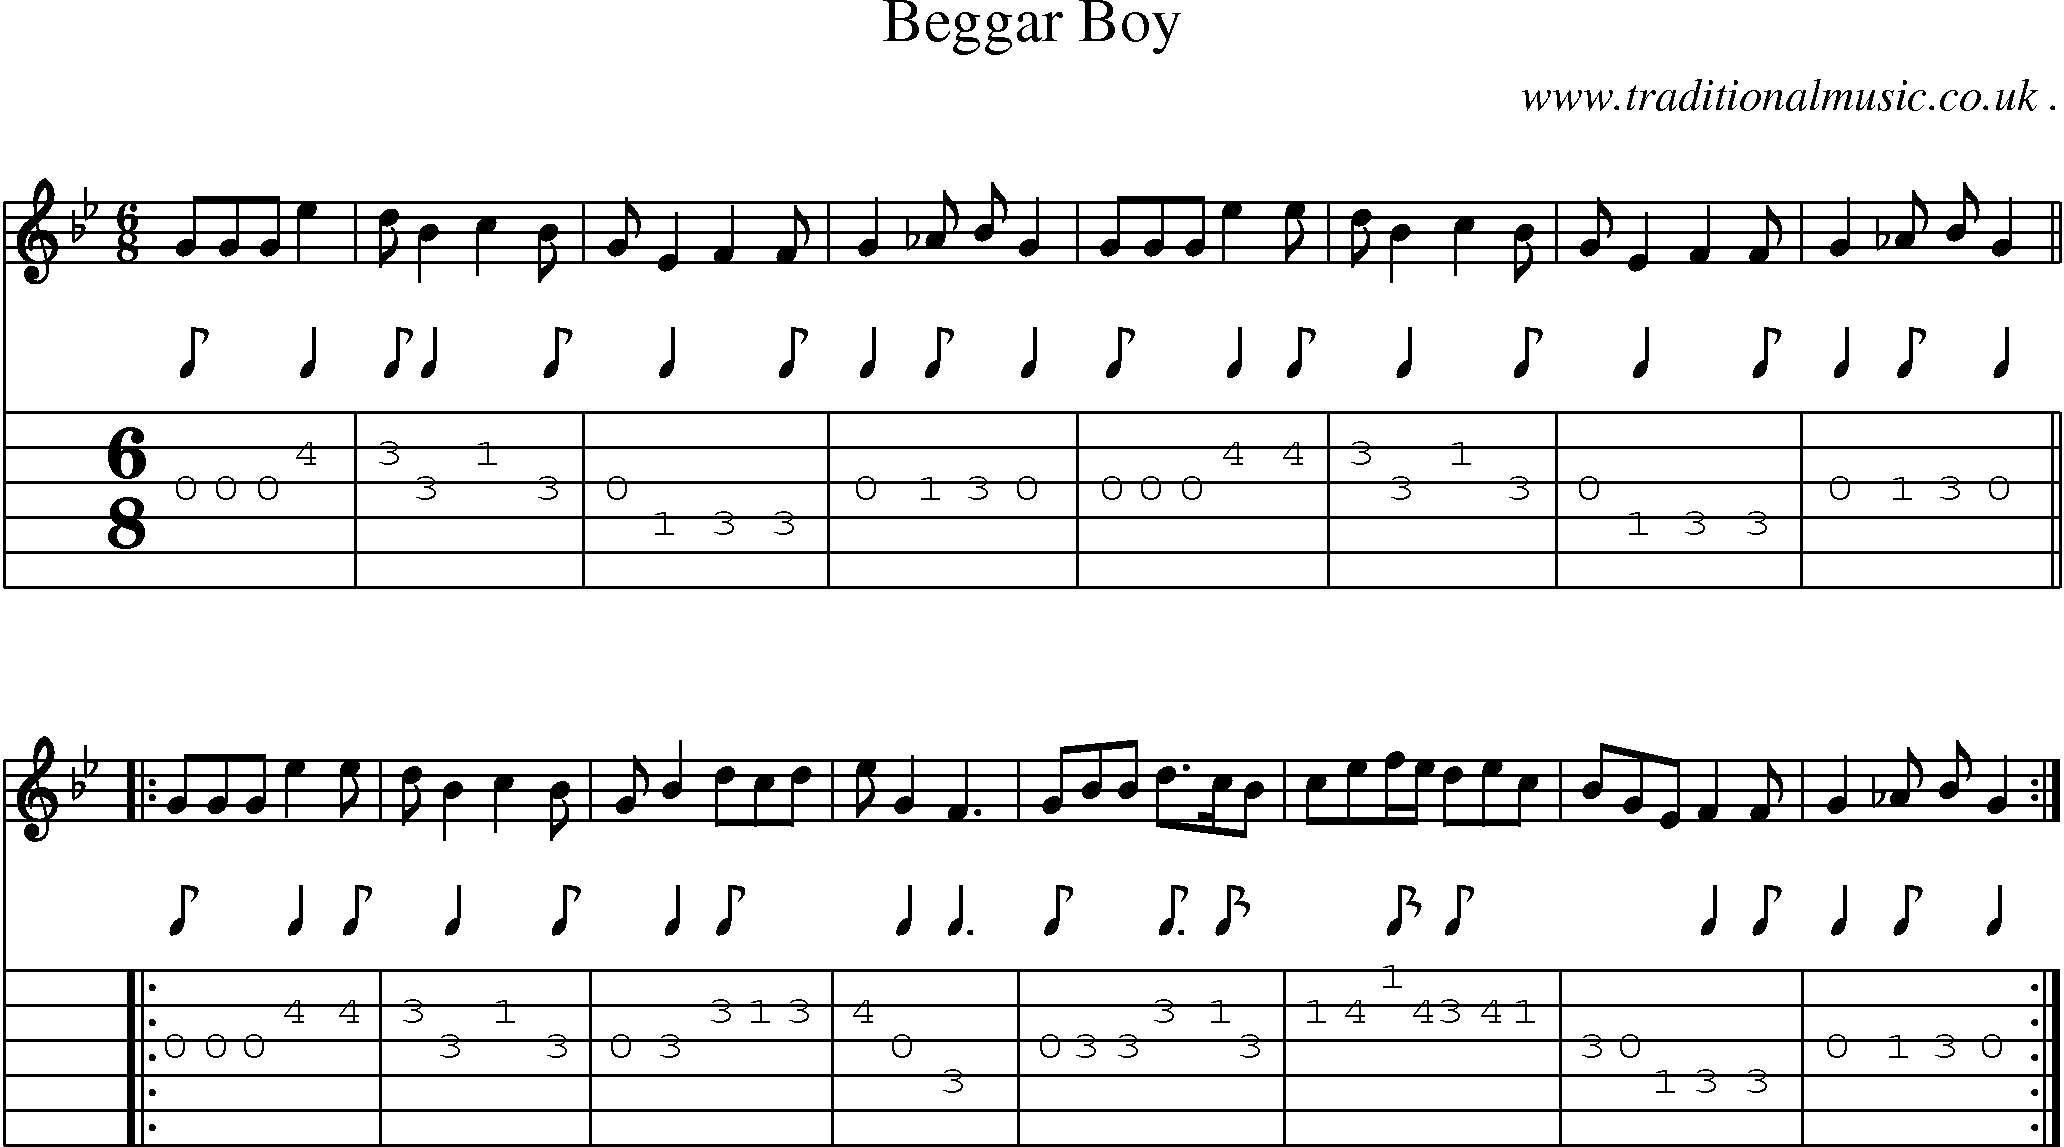 Sheet-Music and Guitar Tabs for Beggar Boy